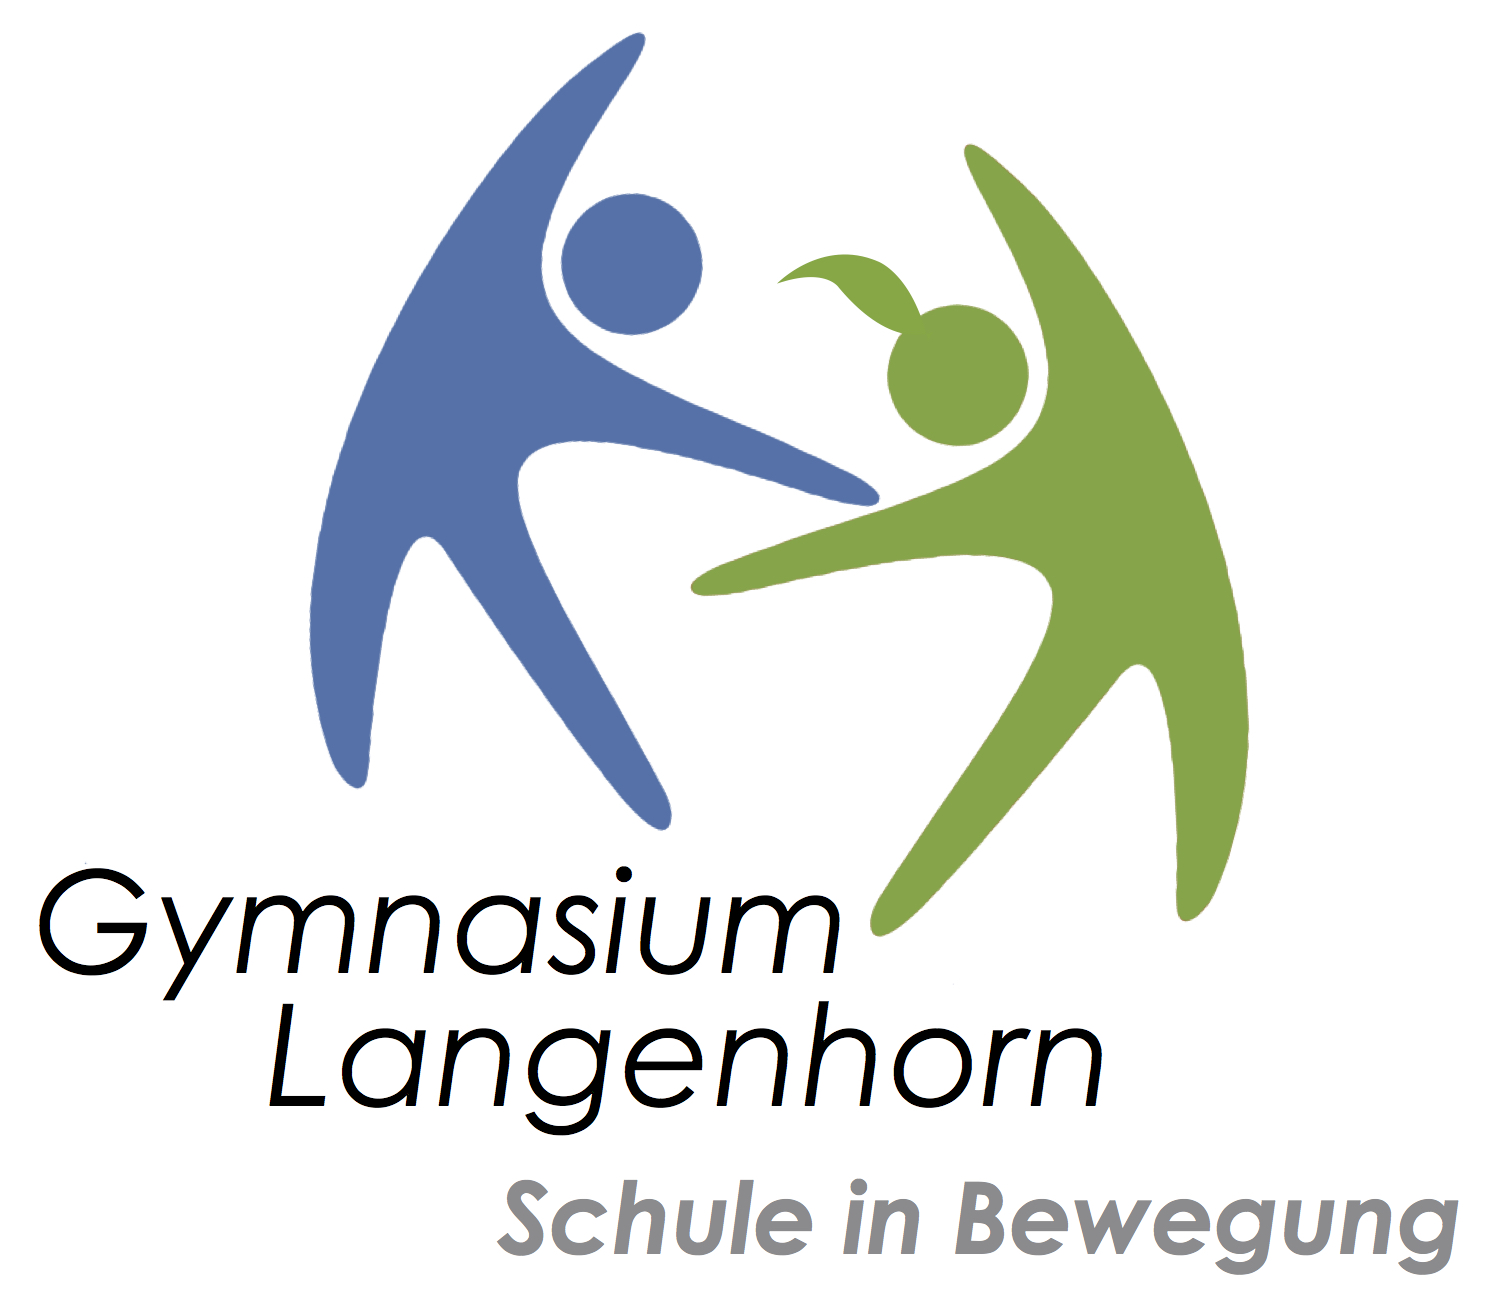 Gymnasium Langenhorn